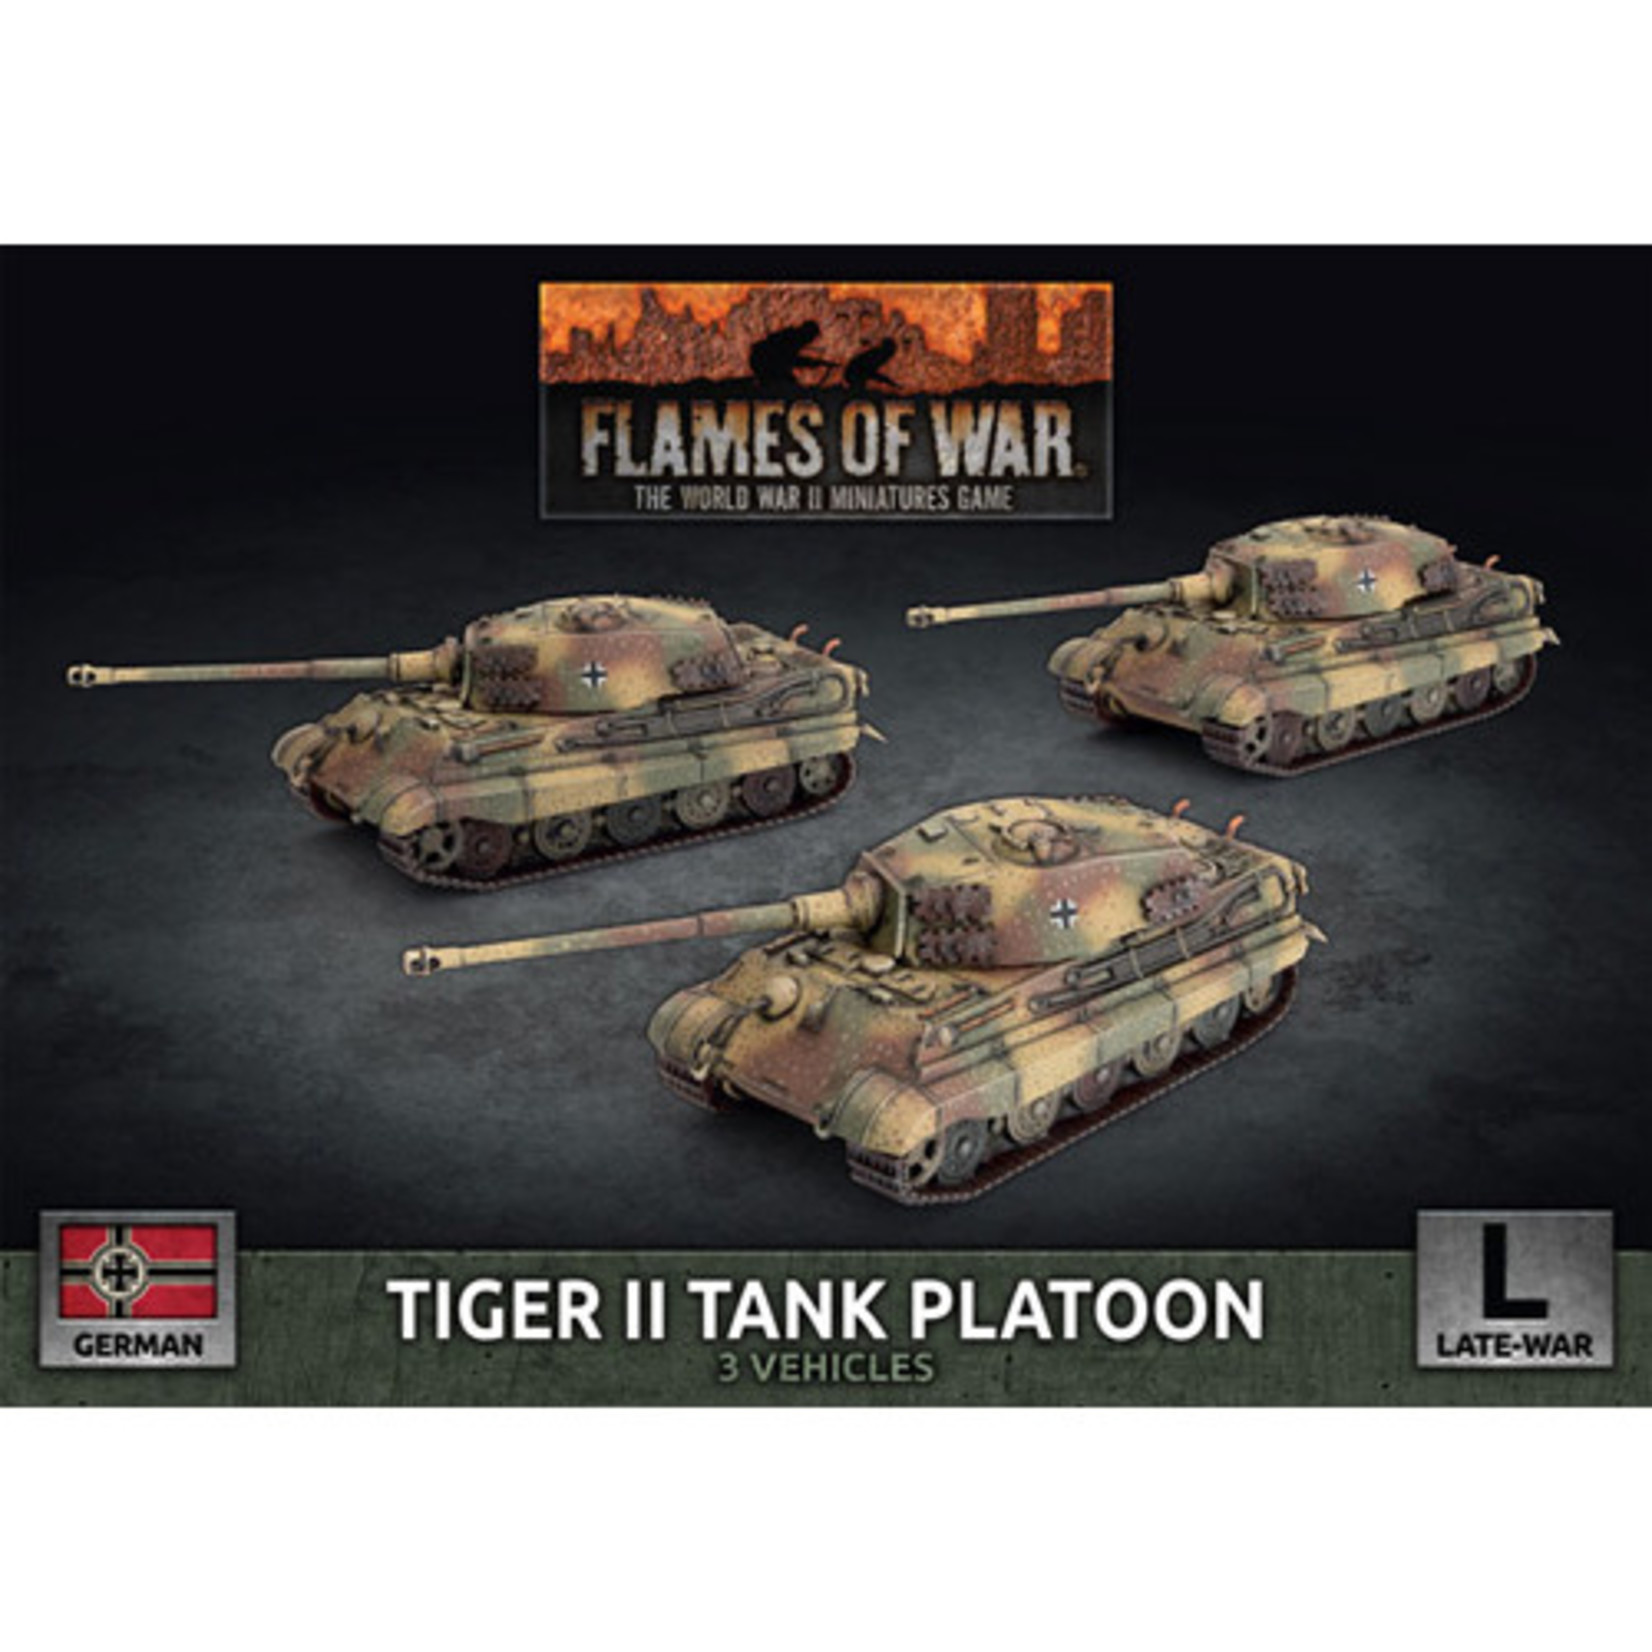 Flames of War Flames of War: German Tiger II Tank Platoon